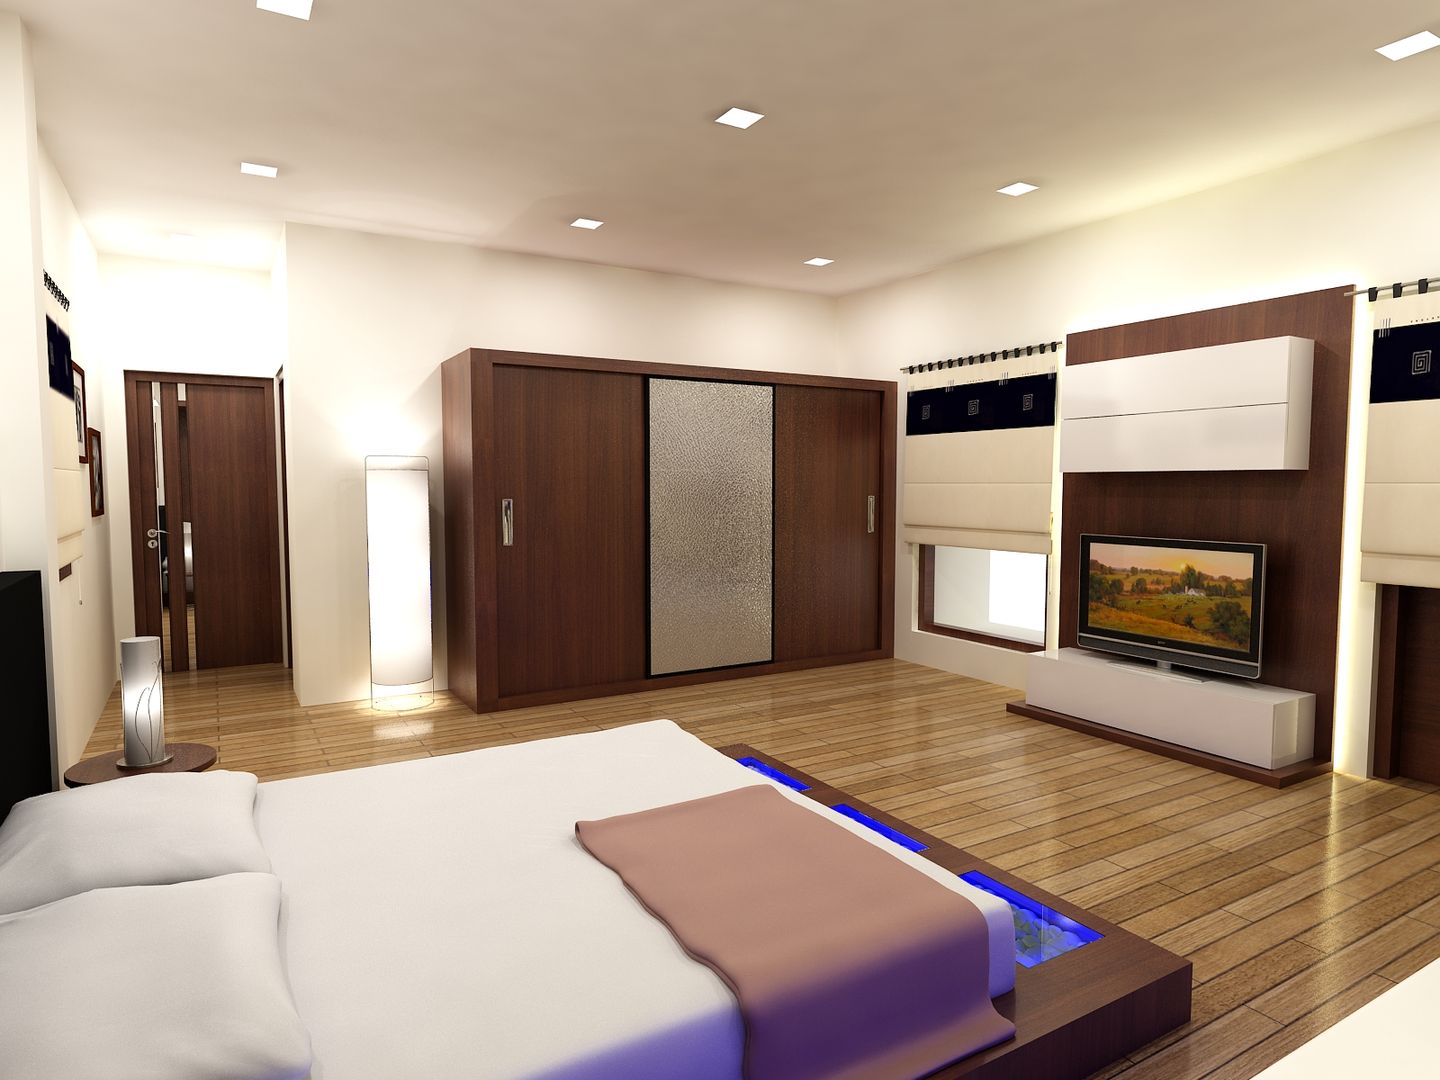 Mr.Javed, Shadab Anwari & Associates. Shadab Anwari & Associates. Asian style bedroom